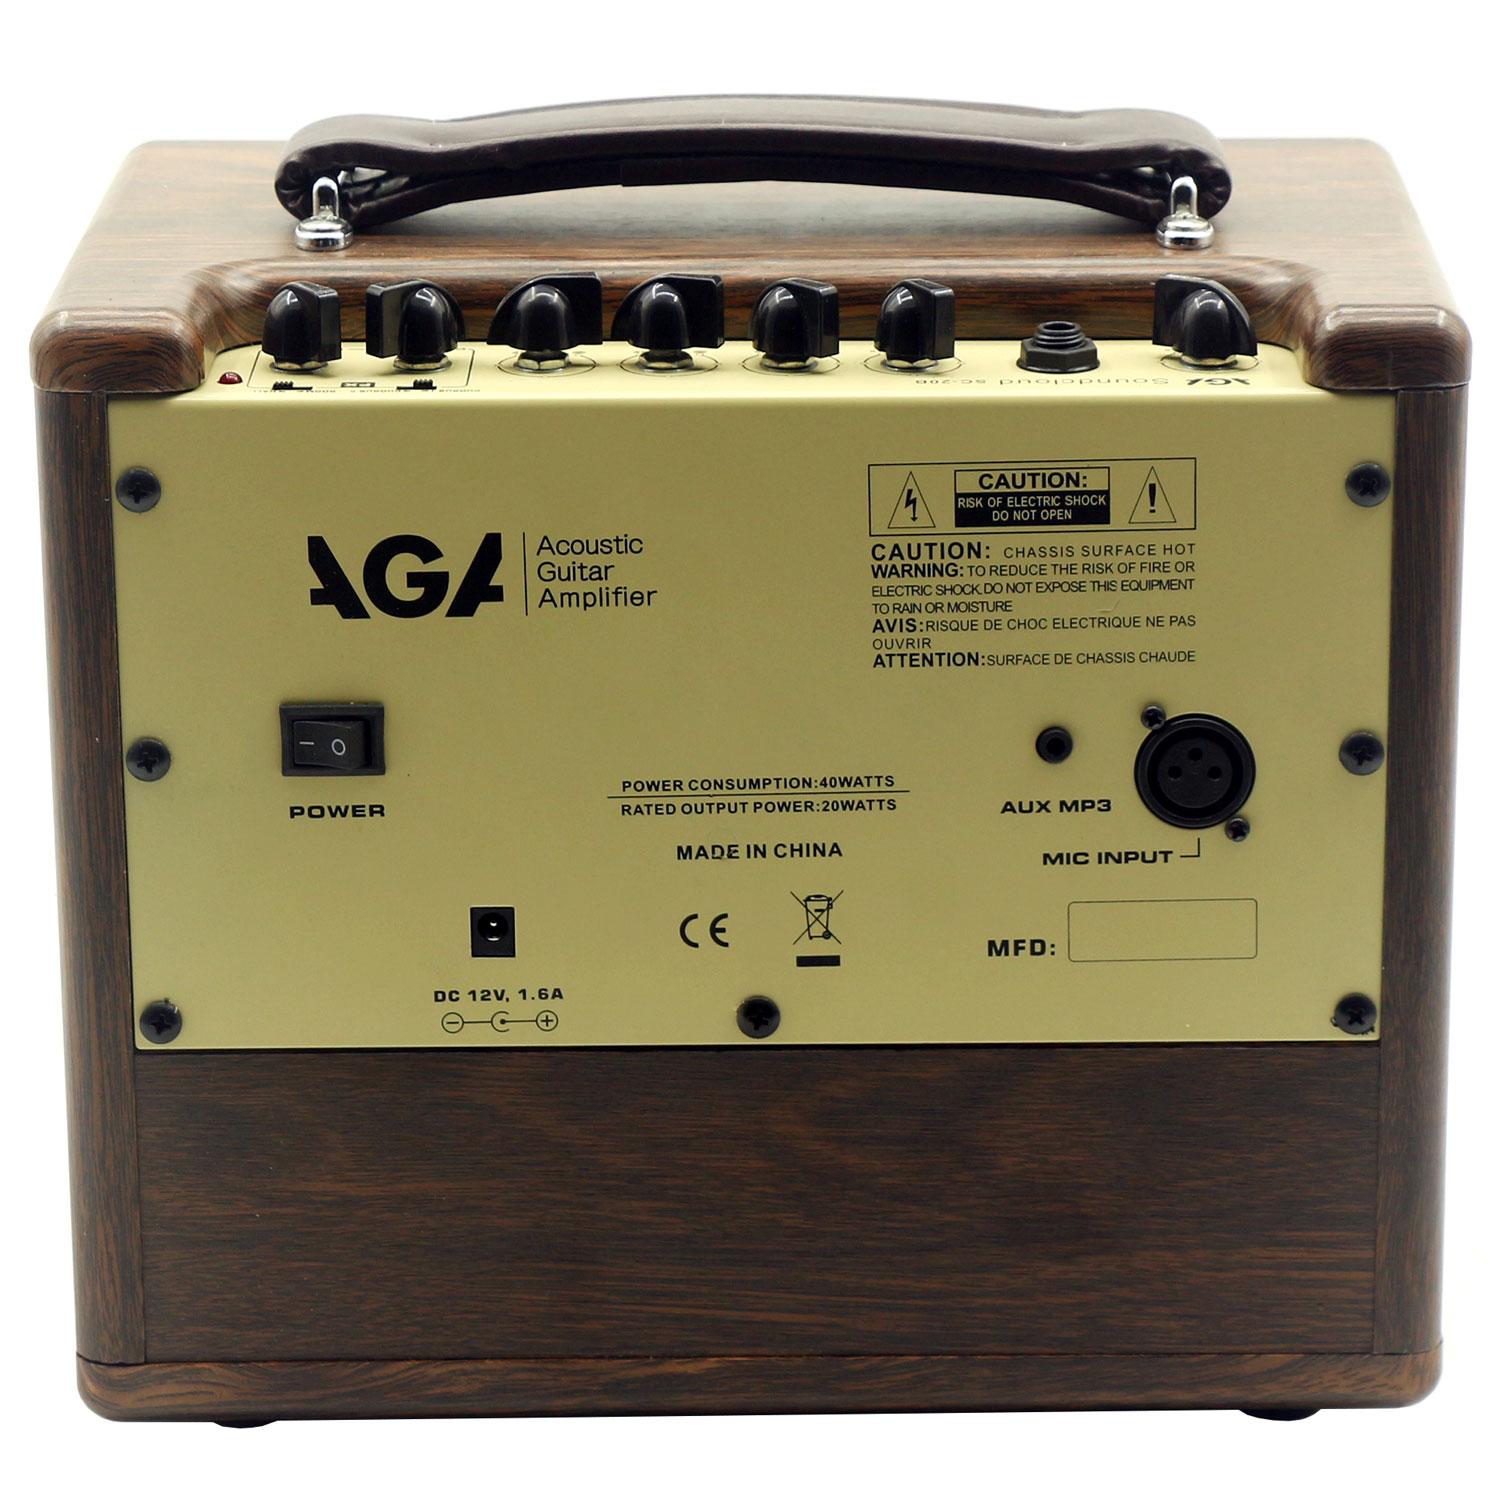 Cong-cam-Ampli-Dan-Acoustic-va-Classic-Giutar-AGA-SC-20-B-tiki